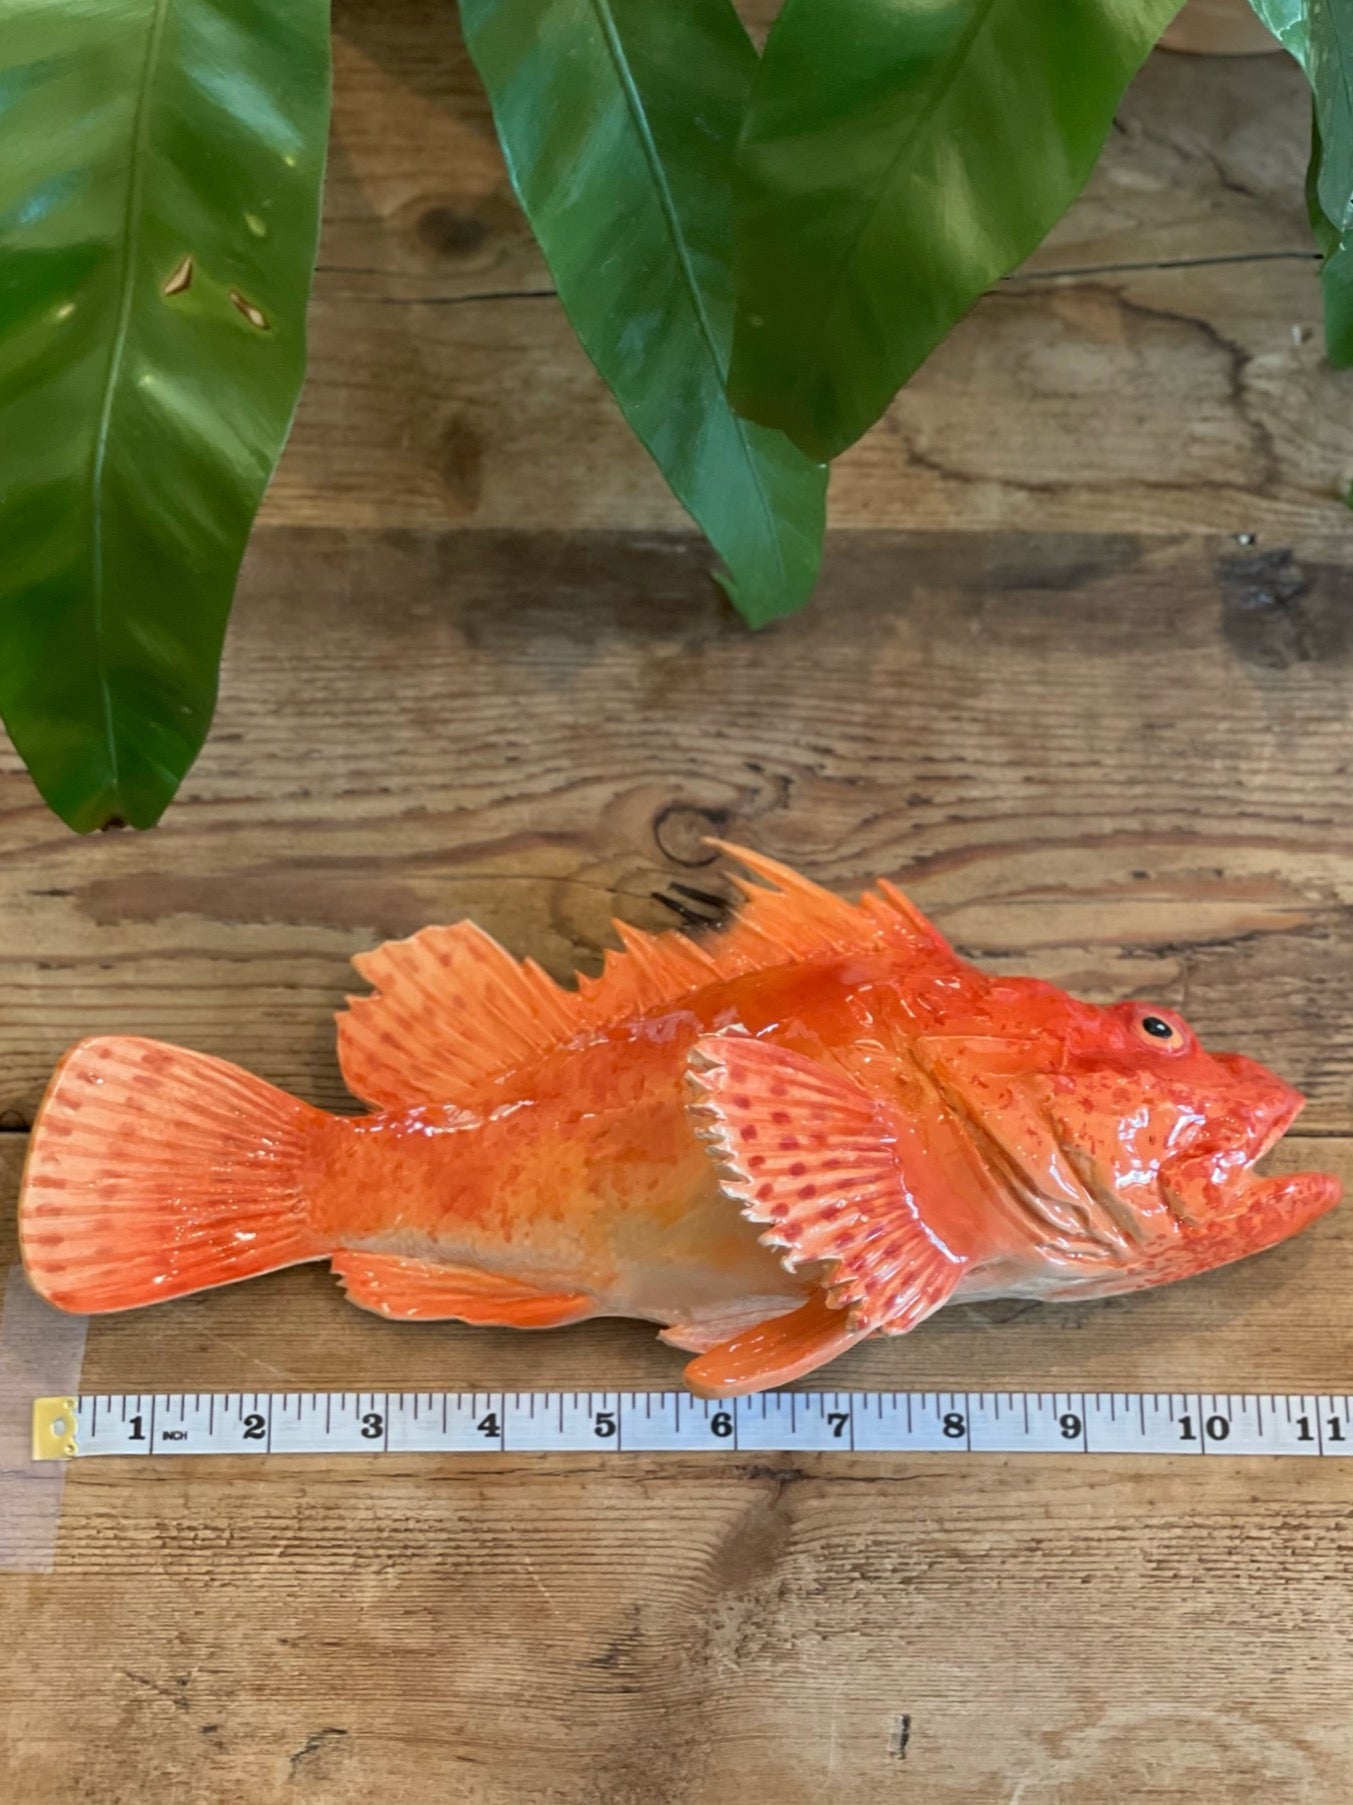 Cipolla - Red Scorpianfish